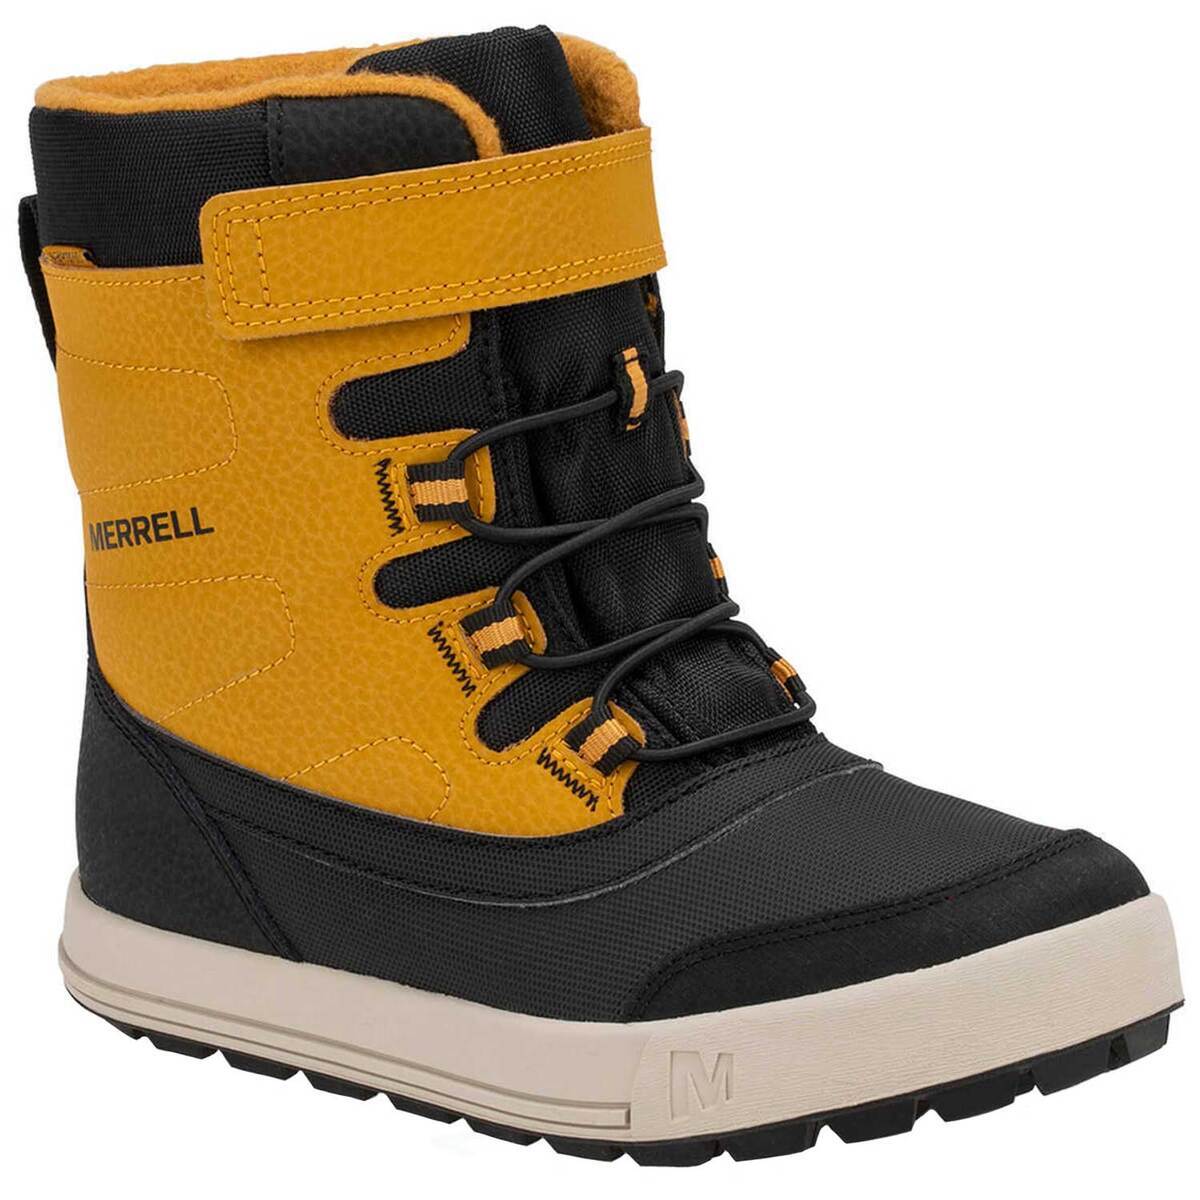 Merrell Snow Storm Waterproof Boots | Warehouse